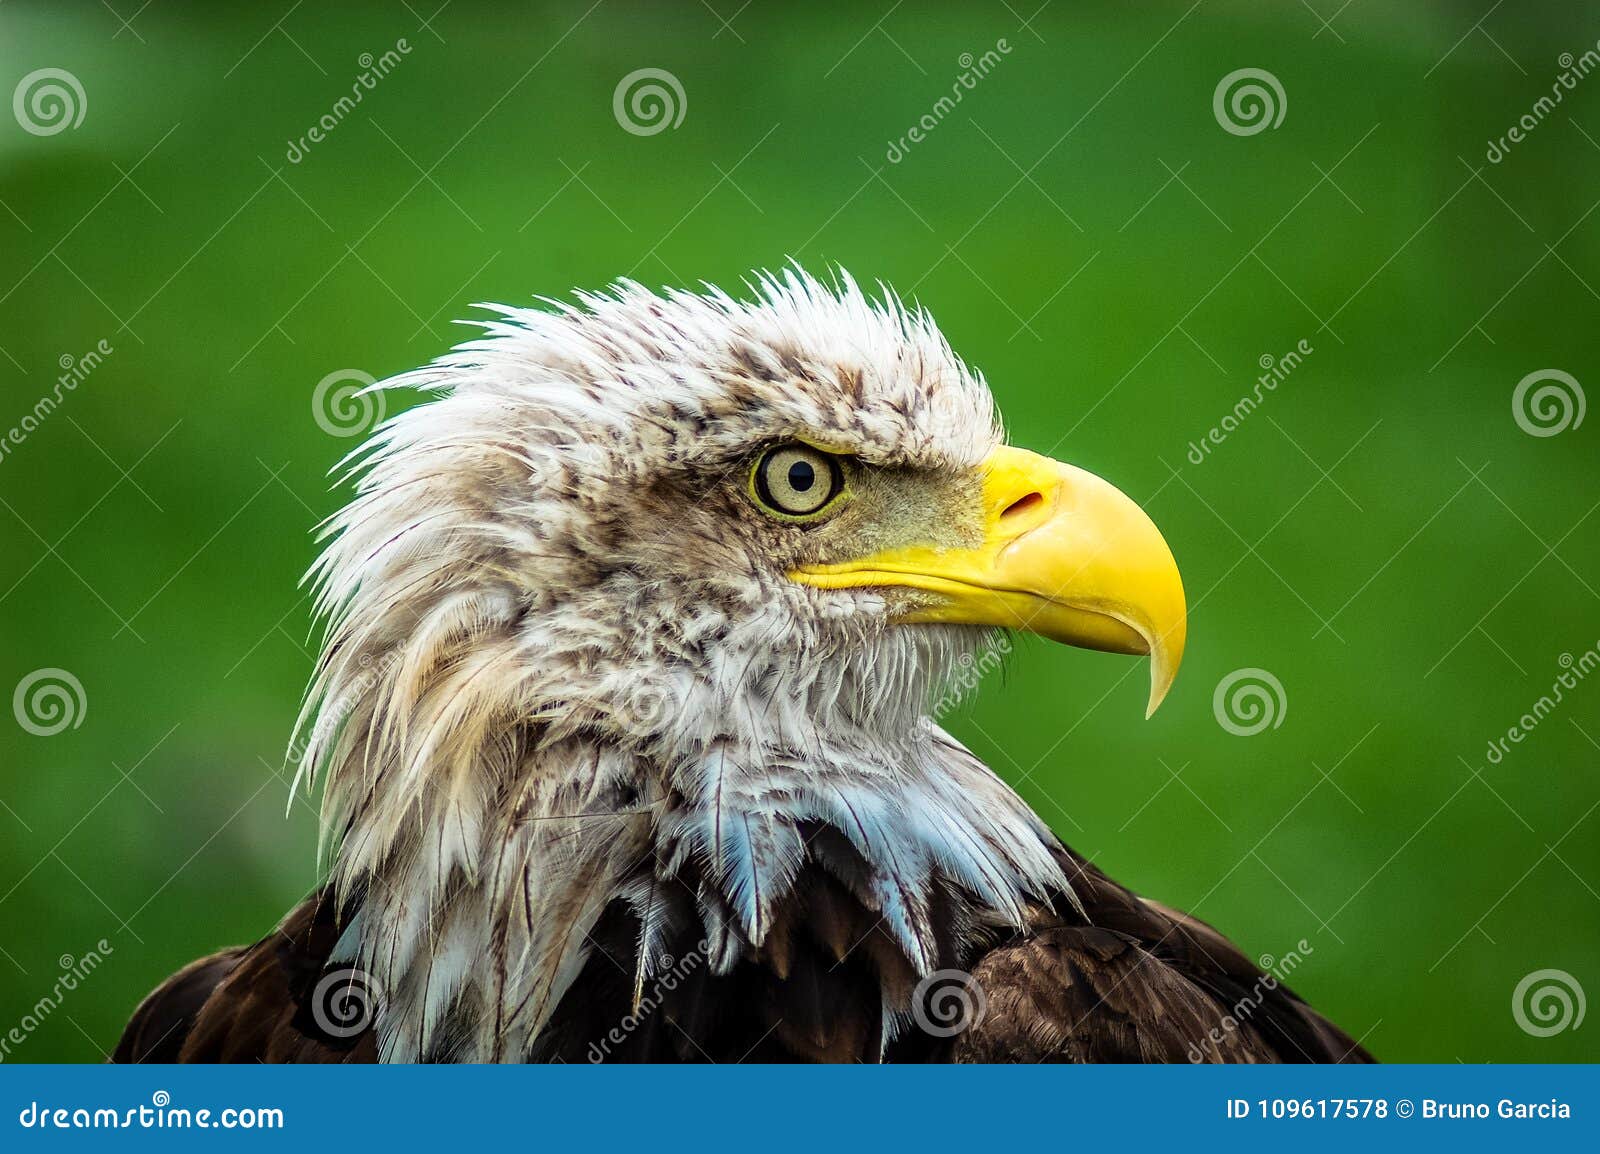 bald eagle in cabarceno natural reserve